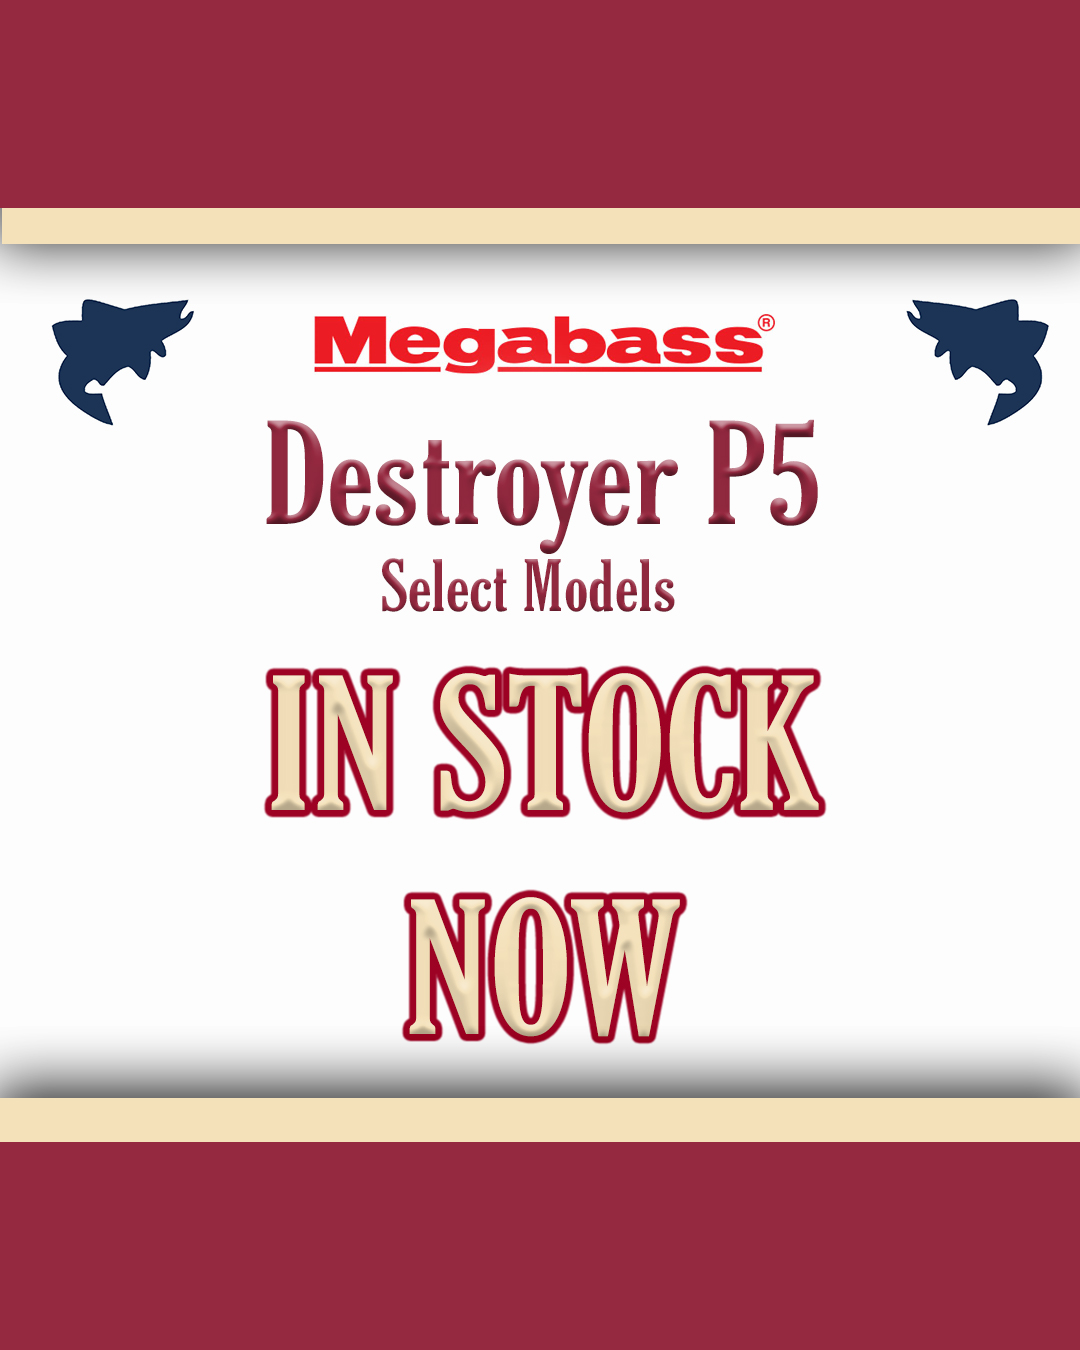 Megabass-Destroyer-P5-In-Stock-Now